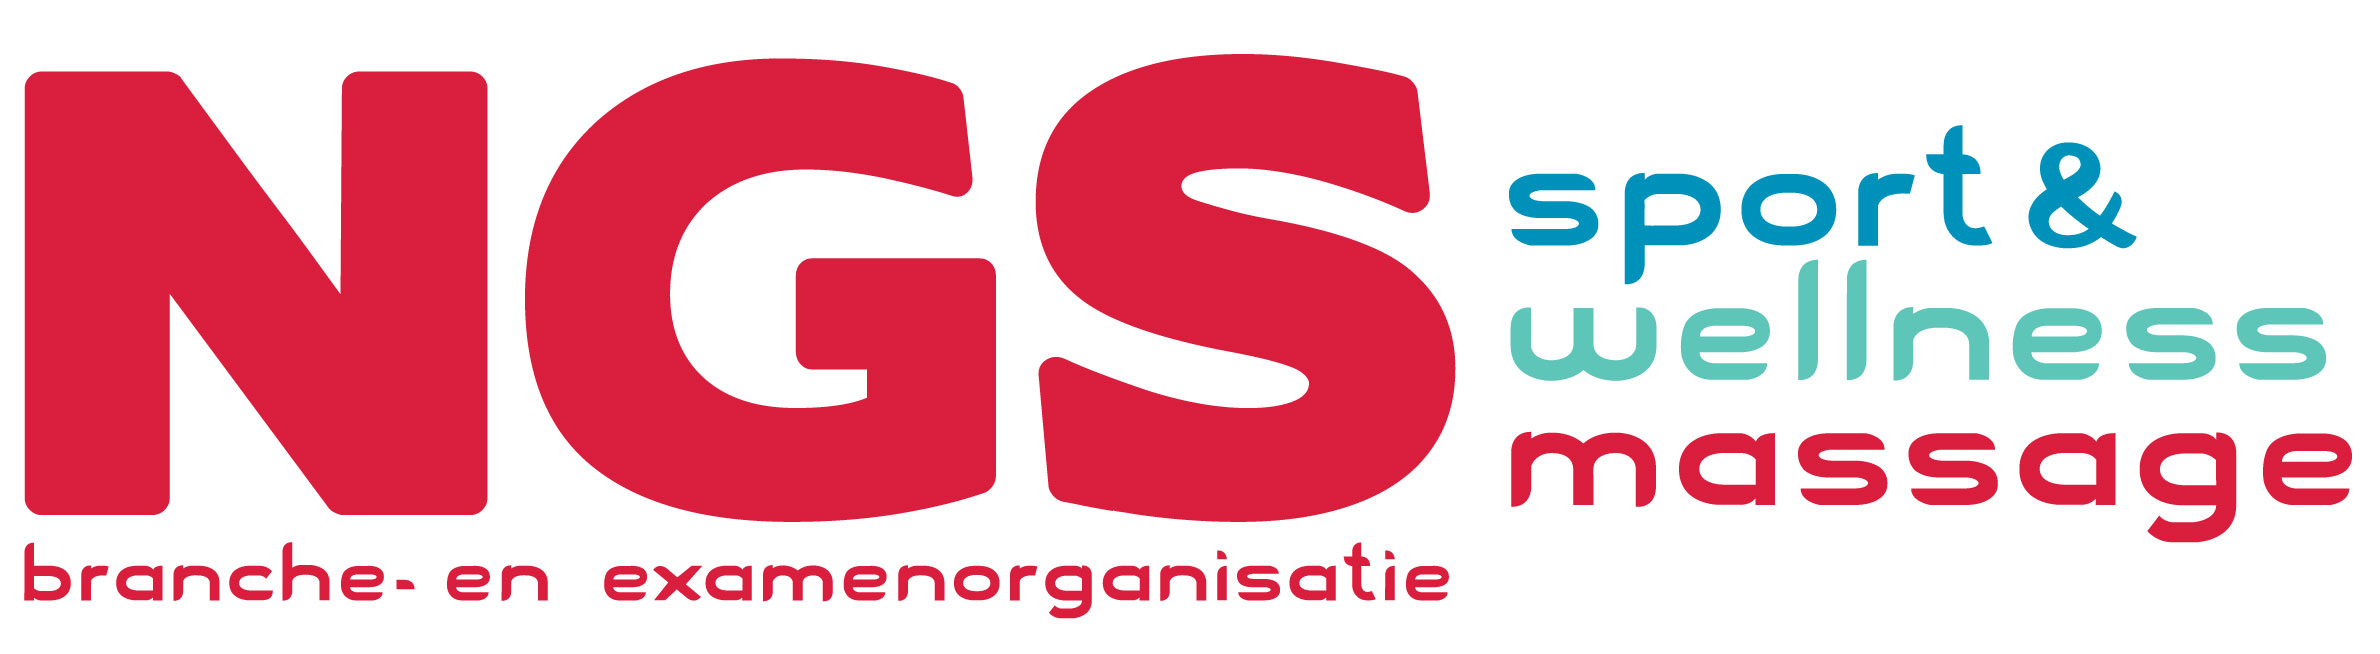 NGS Sport & wellness massage Fong's Chi massage en acupunctuur praktijk in Almere Buiten